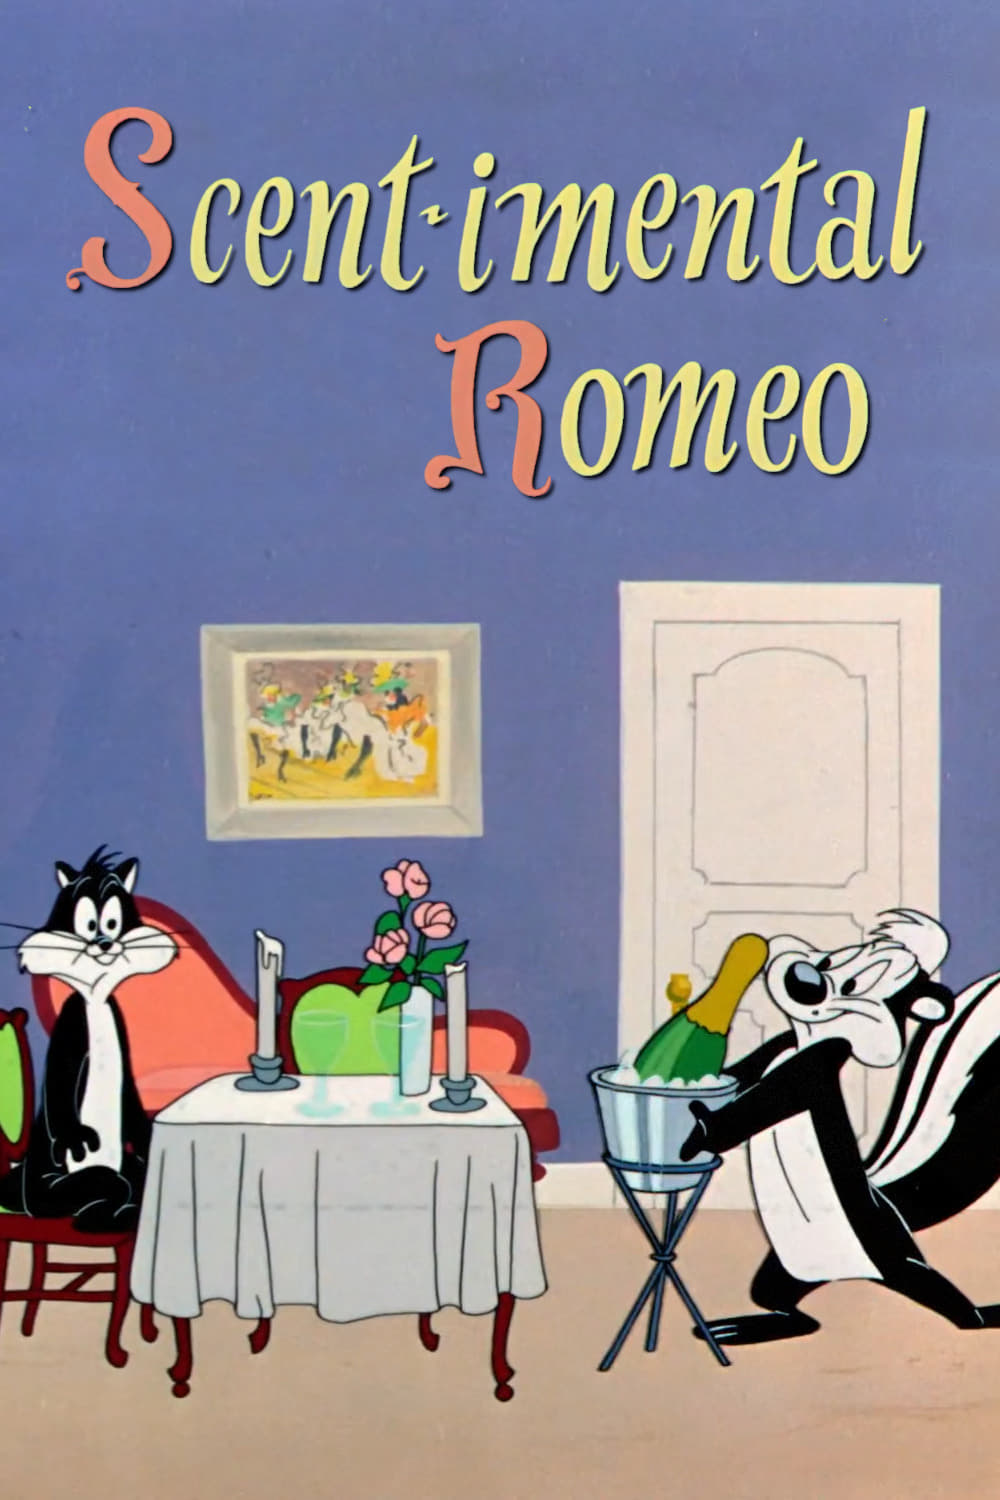 Scent-imental Romeo (1951)